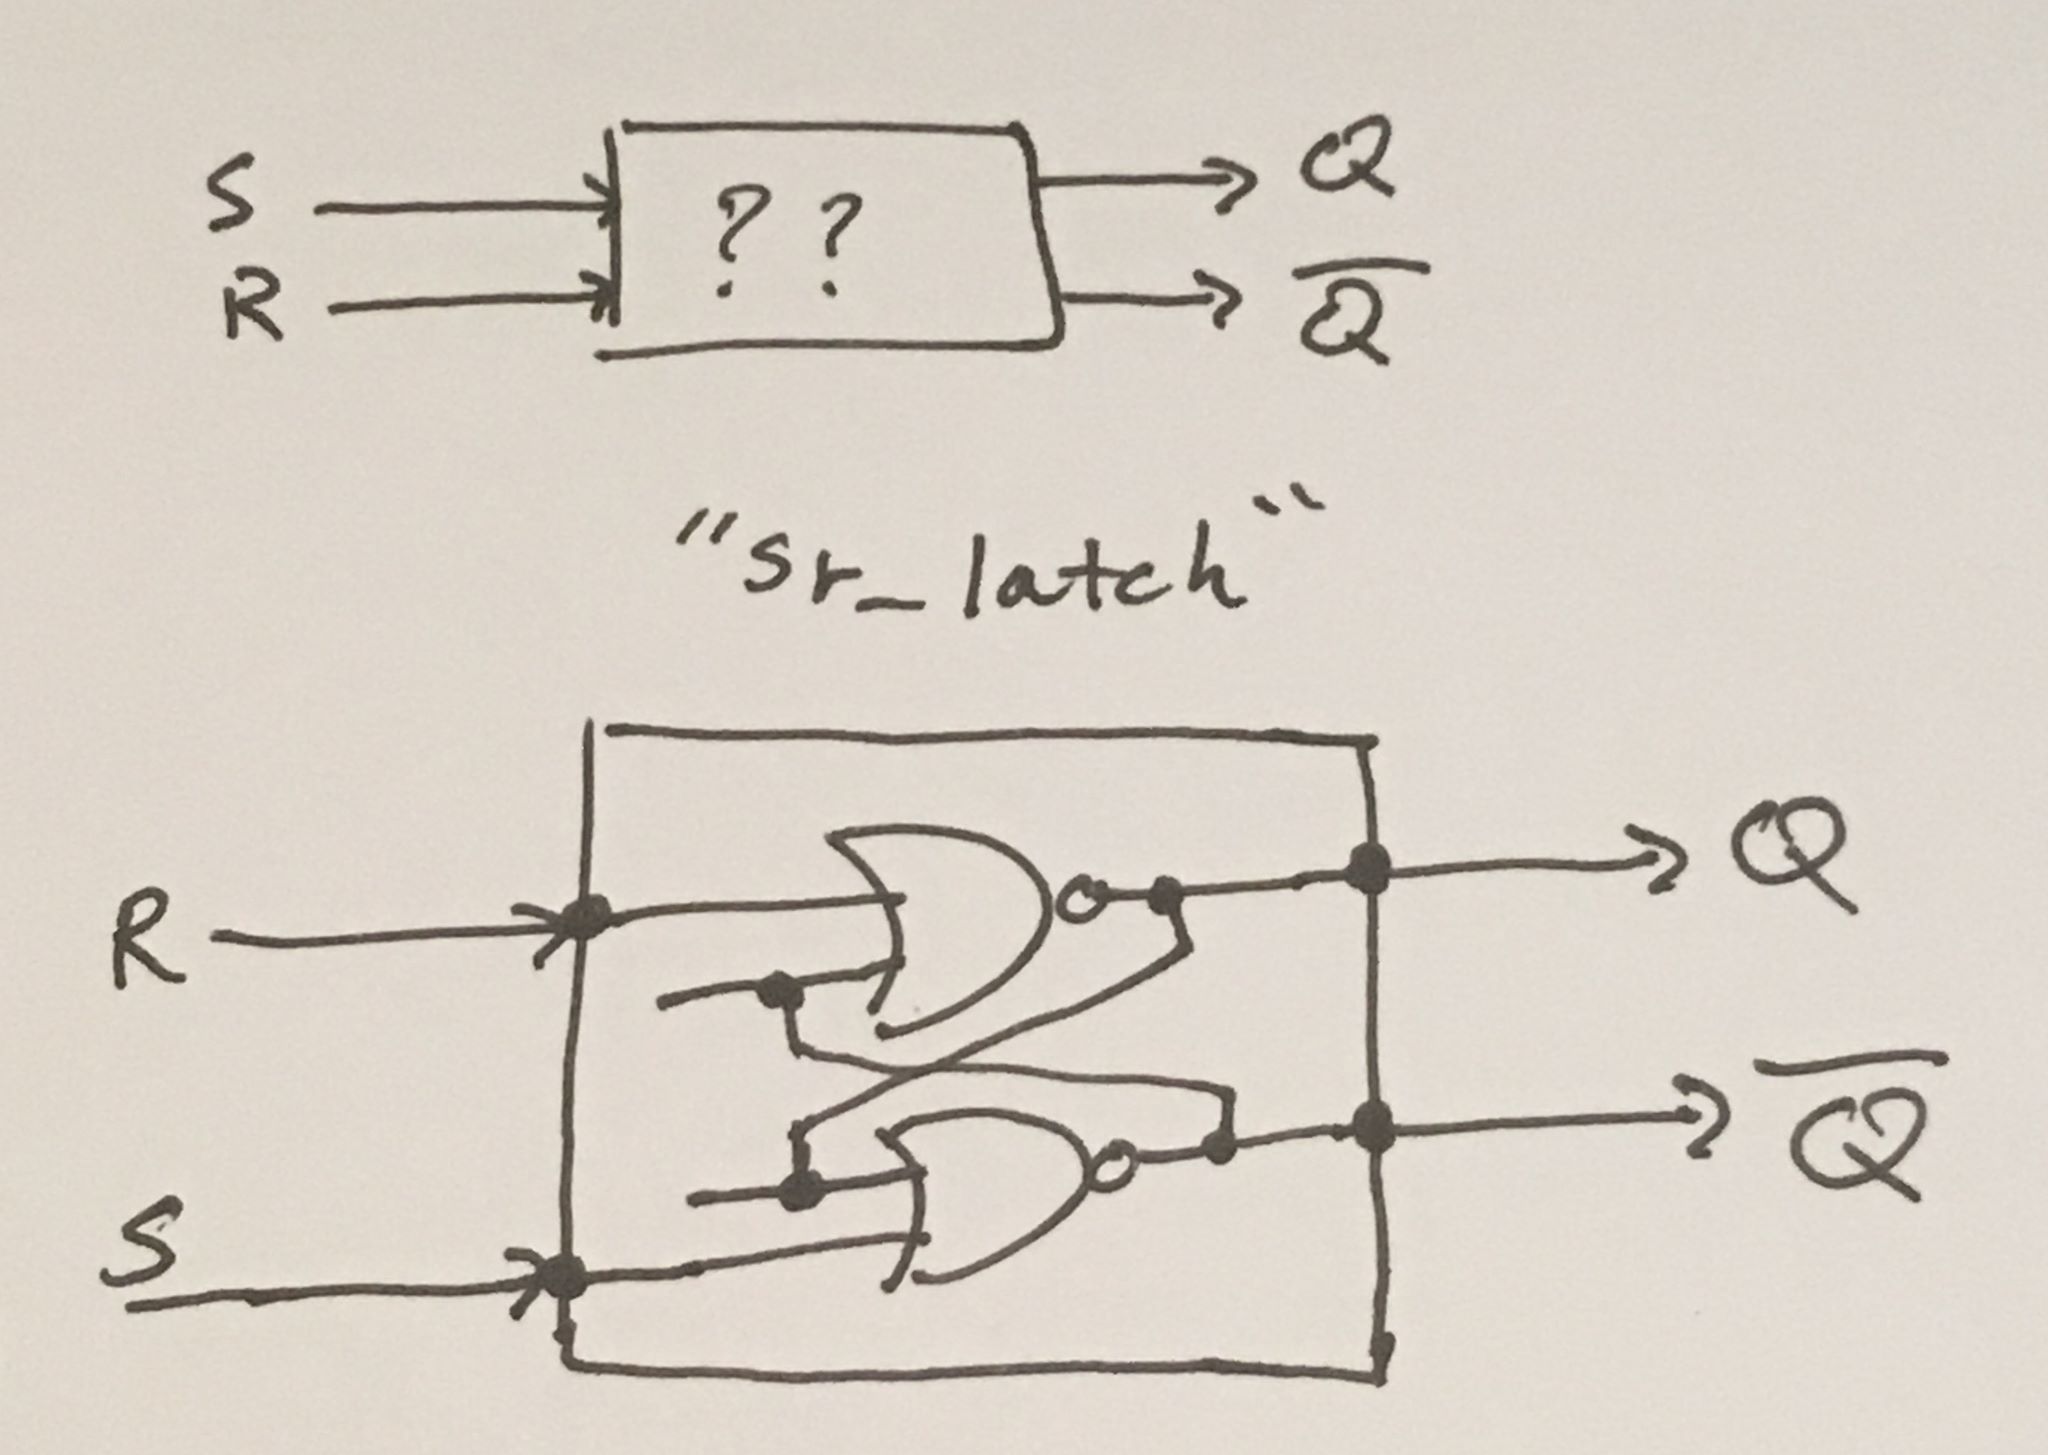 sr latch rendered as
module